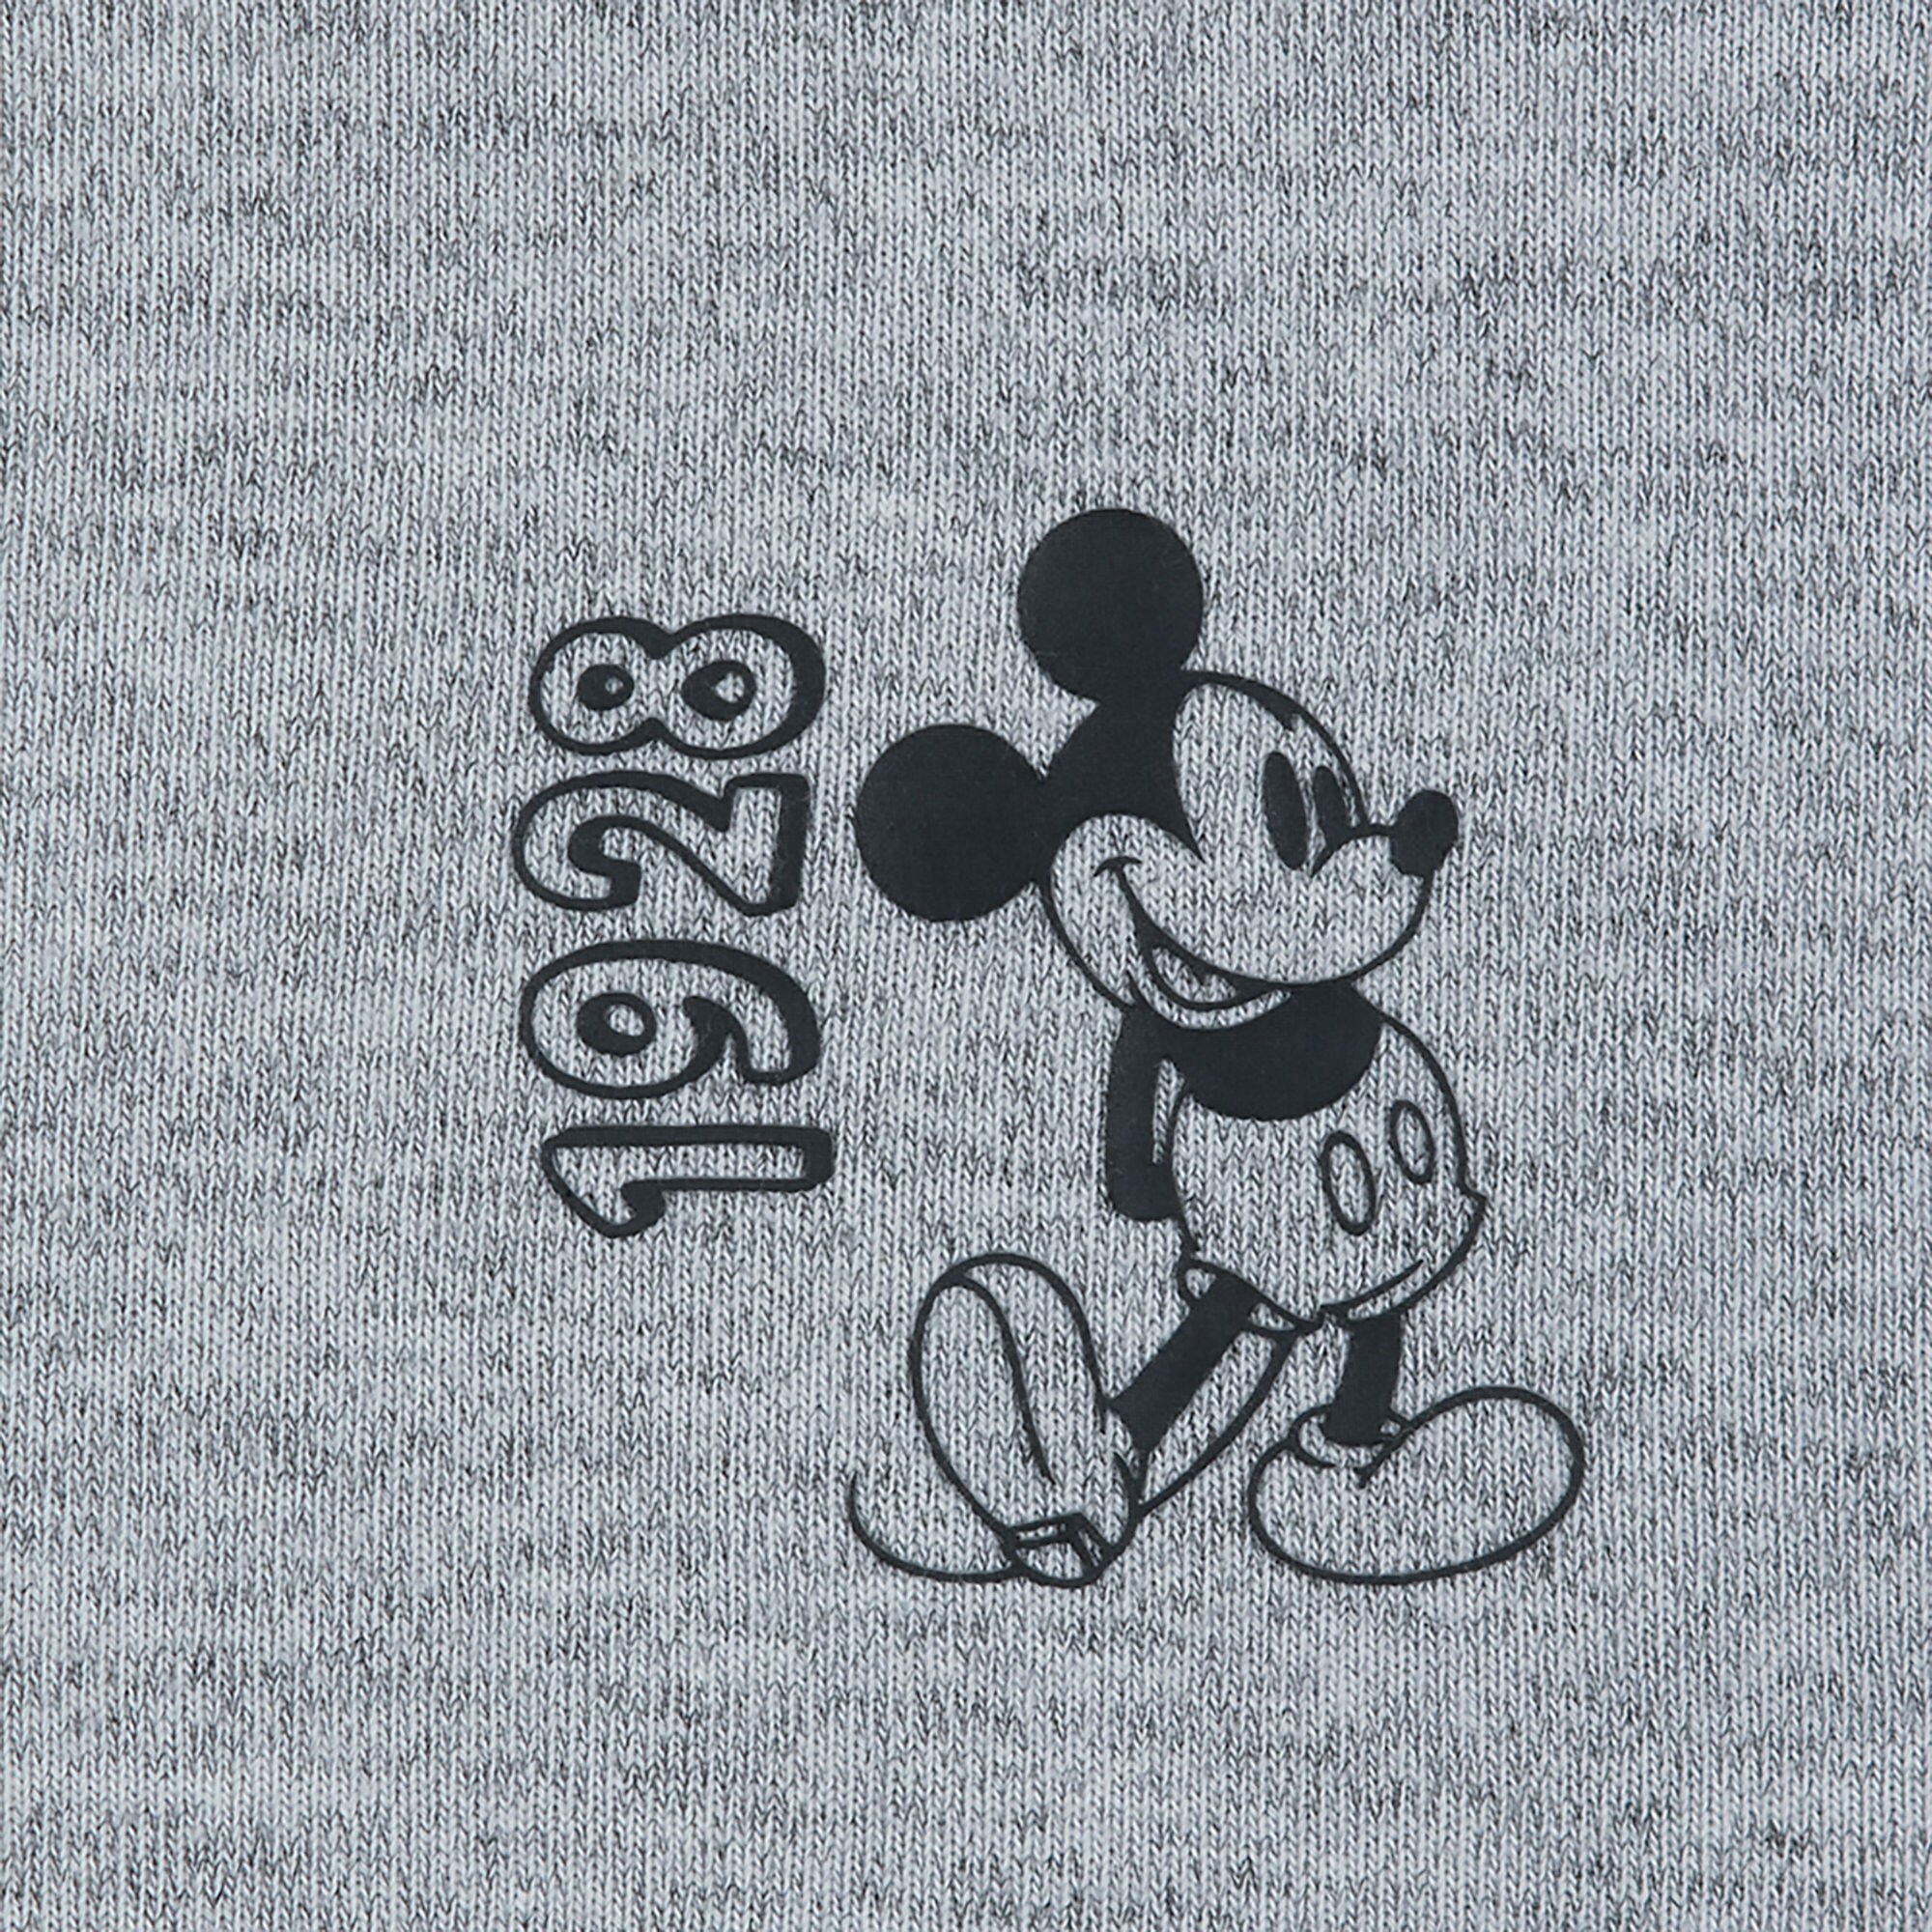 Mickey Mouse Lounge Top for Men - Walt Disney World